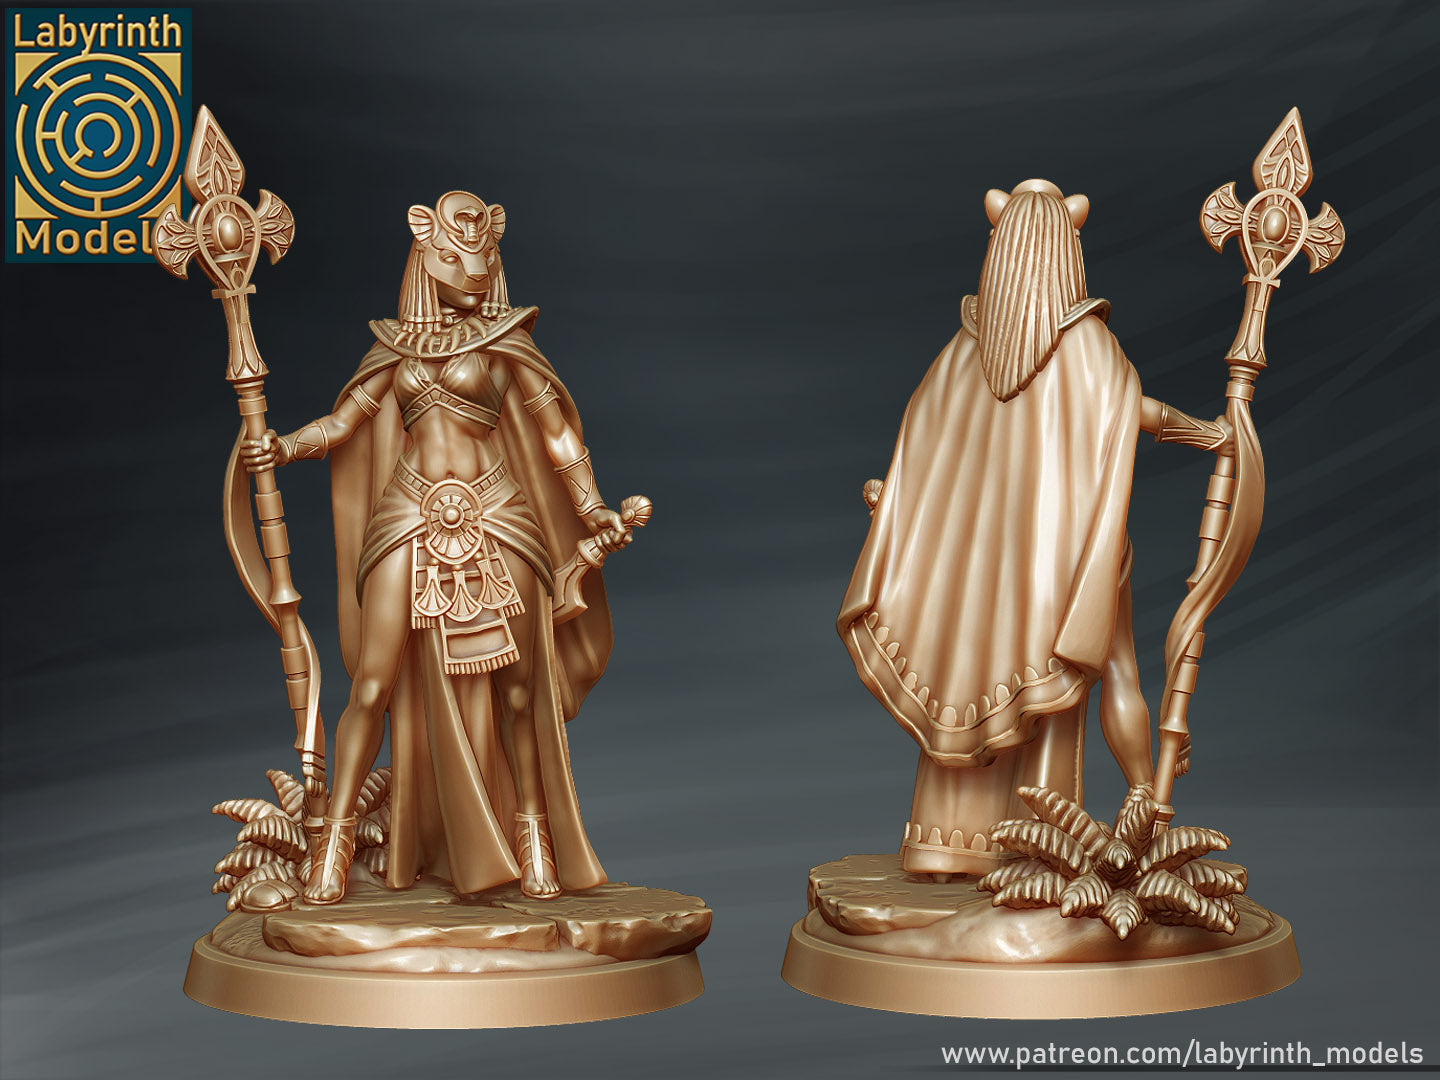 Priestess of Sekhmet by Labyrinth Models